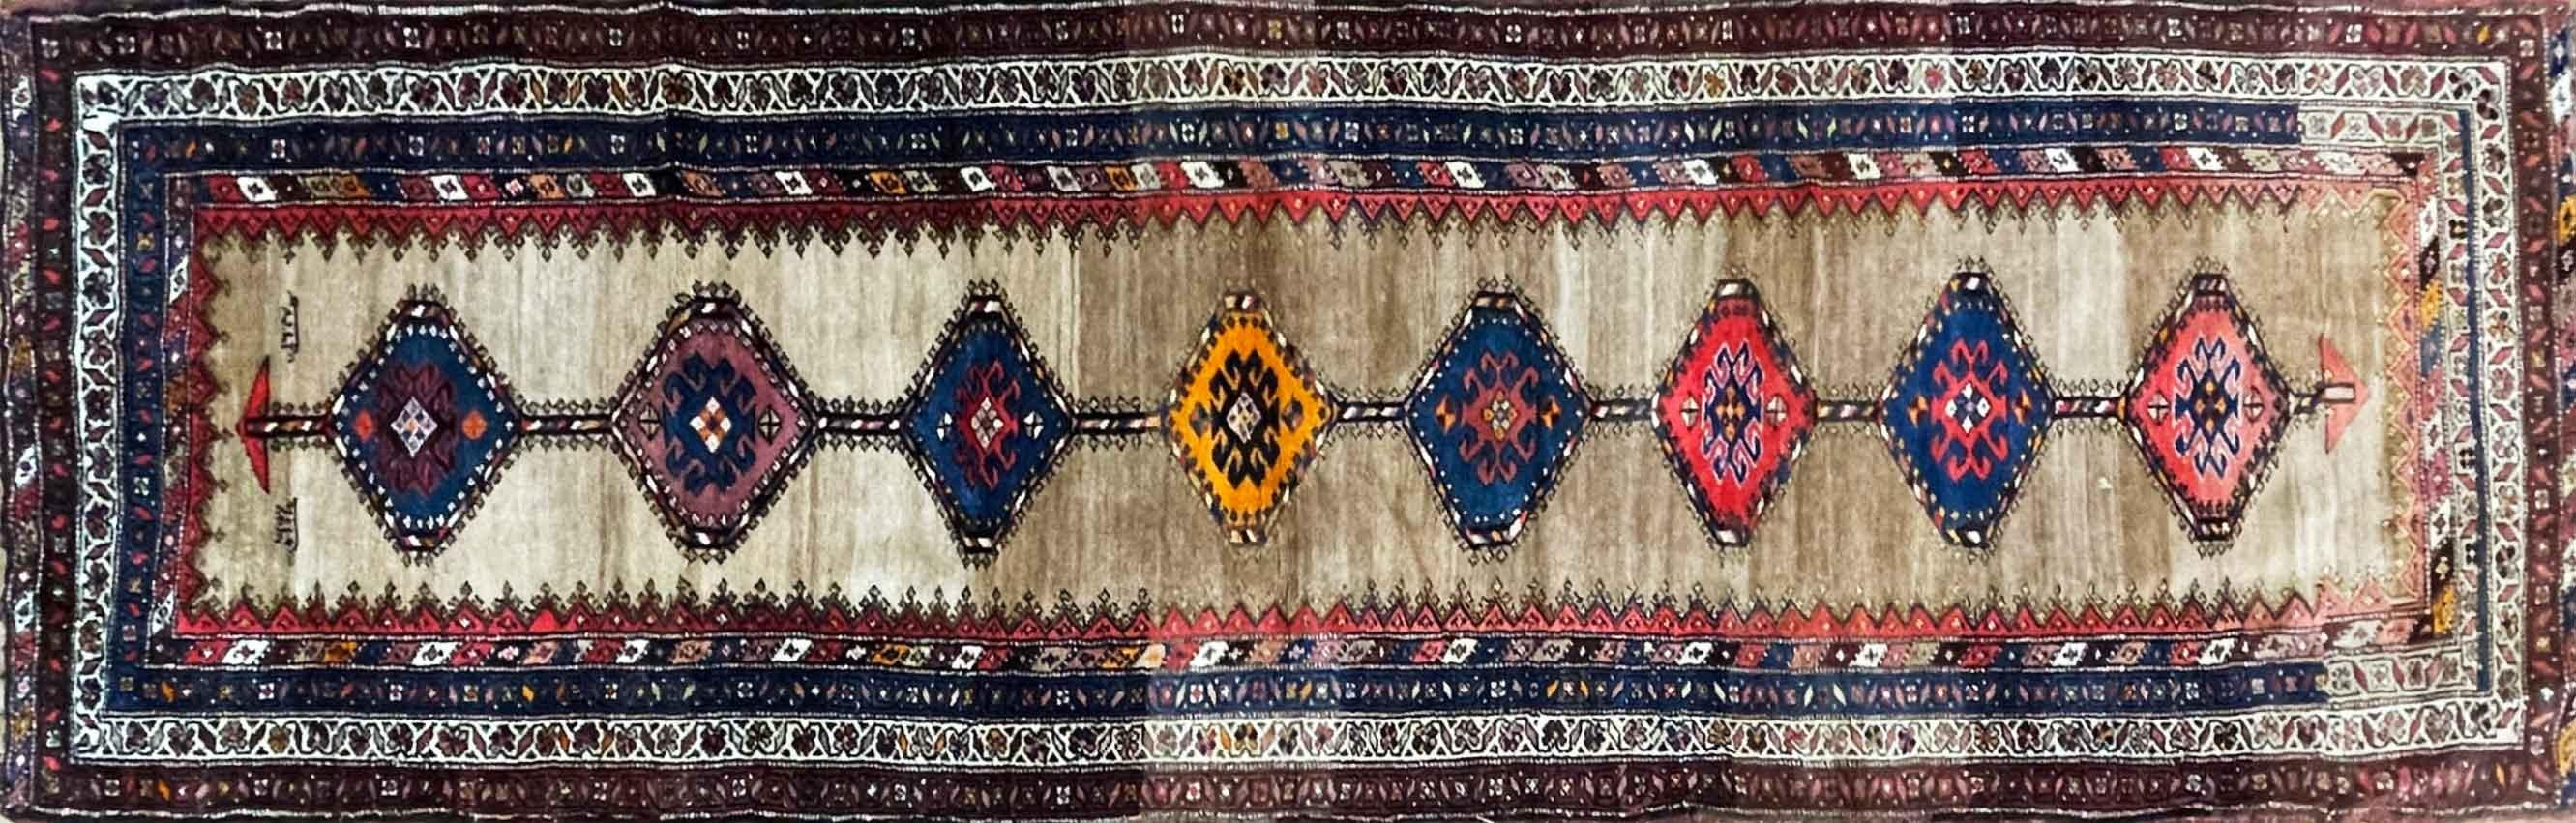 Wool Antique Persian Serab/Serapi Runner, Camel Color, C-1900's For Sale